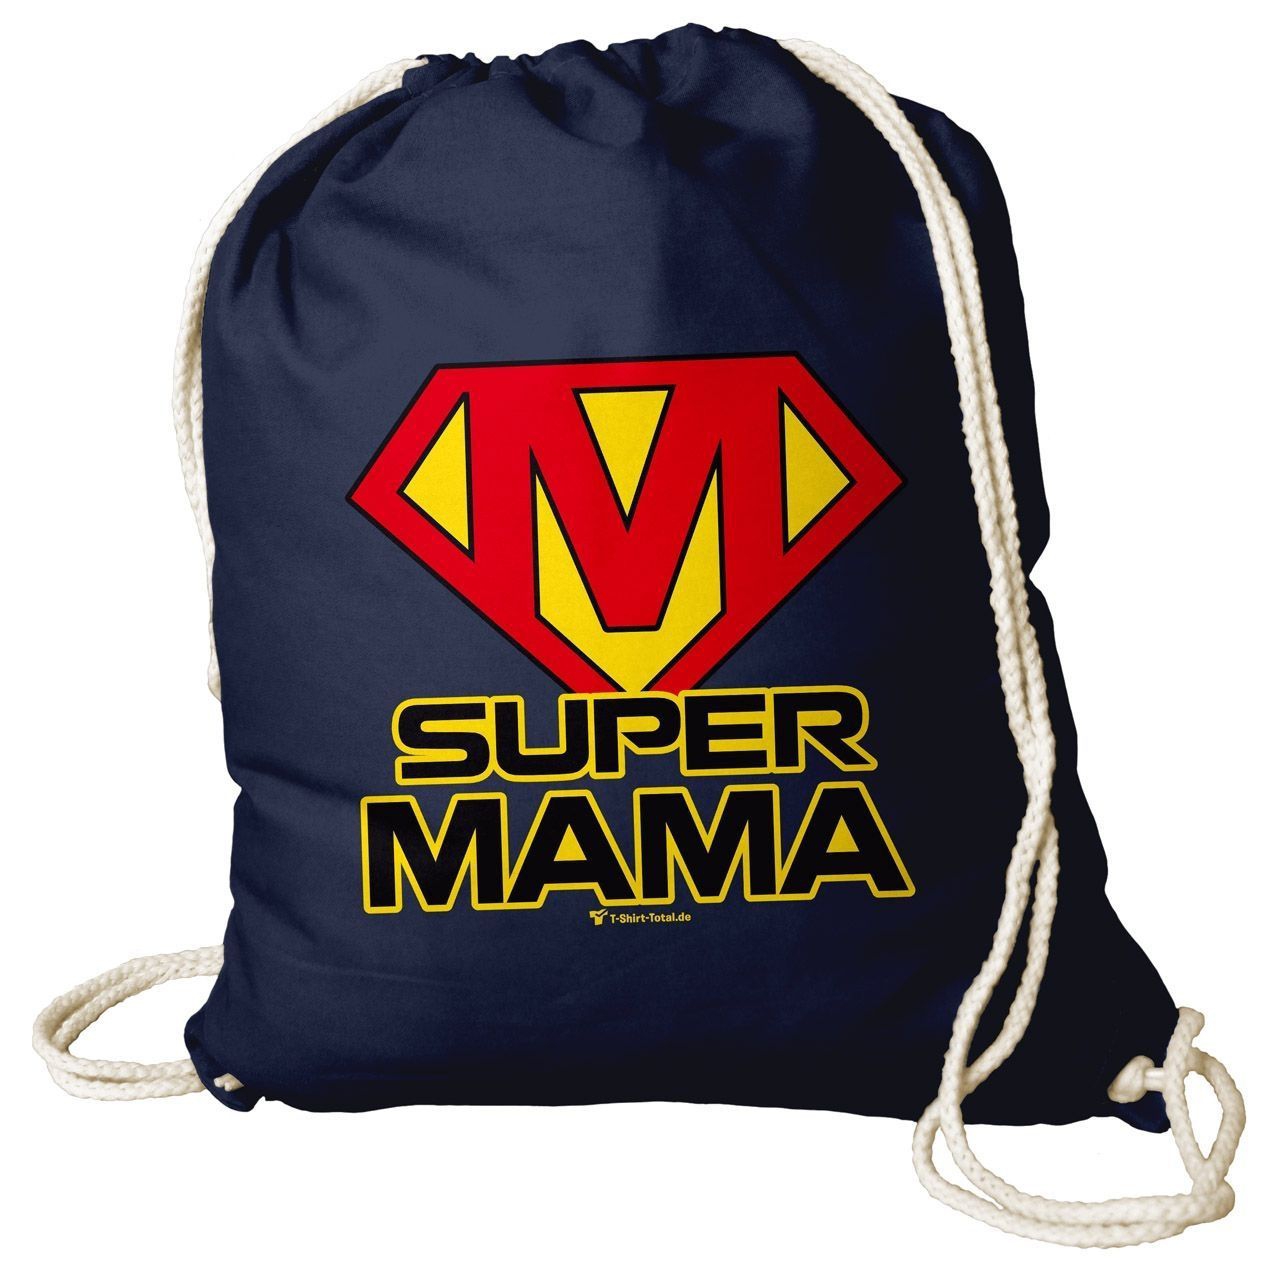 Super Mama Rucksack Beutel navy